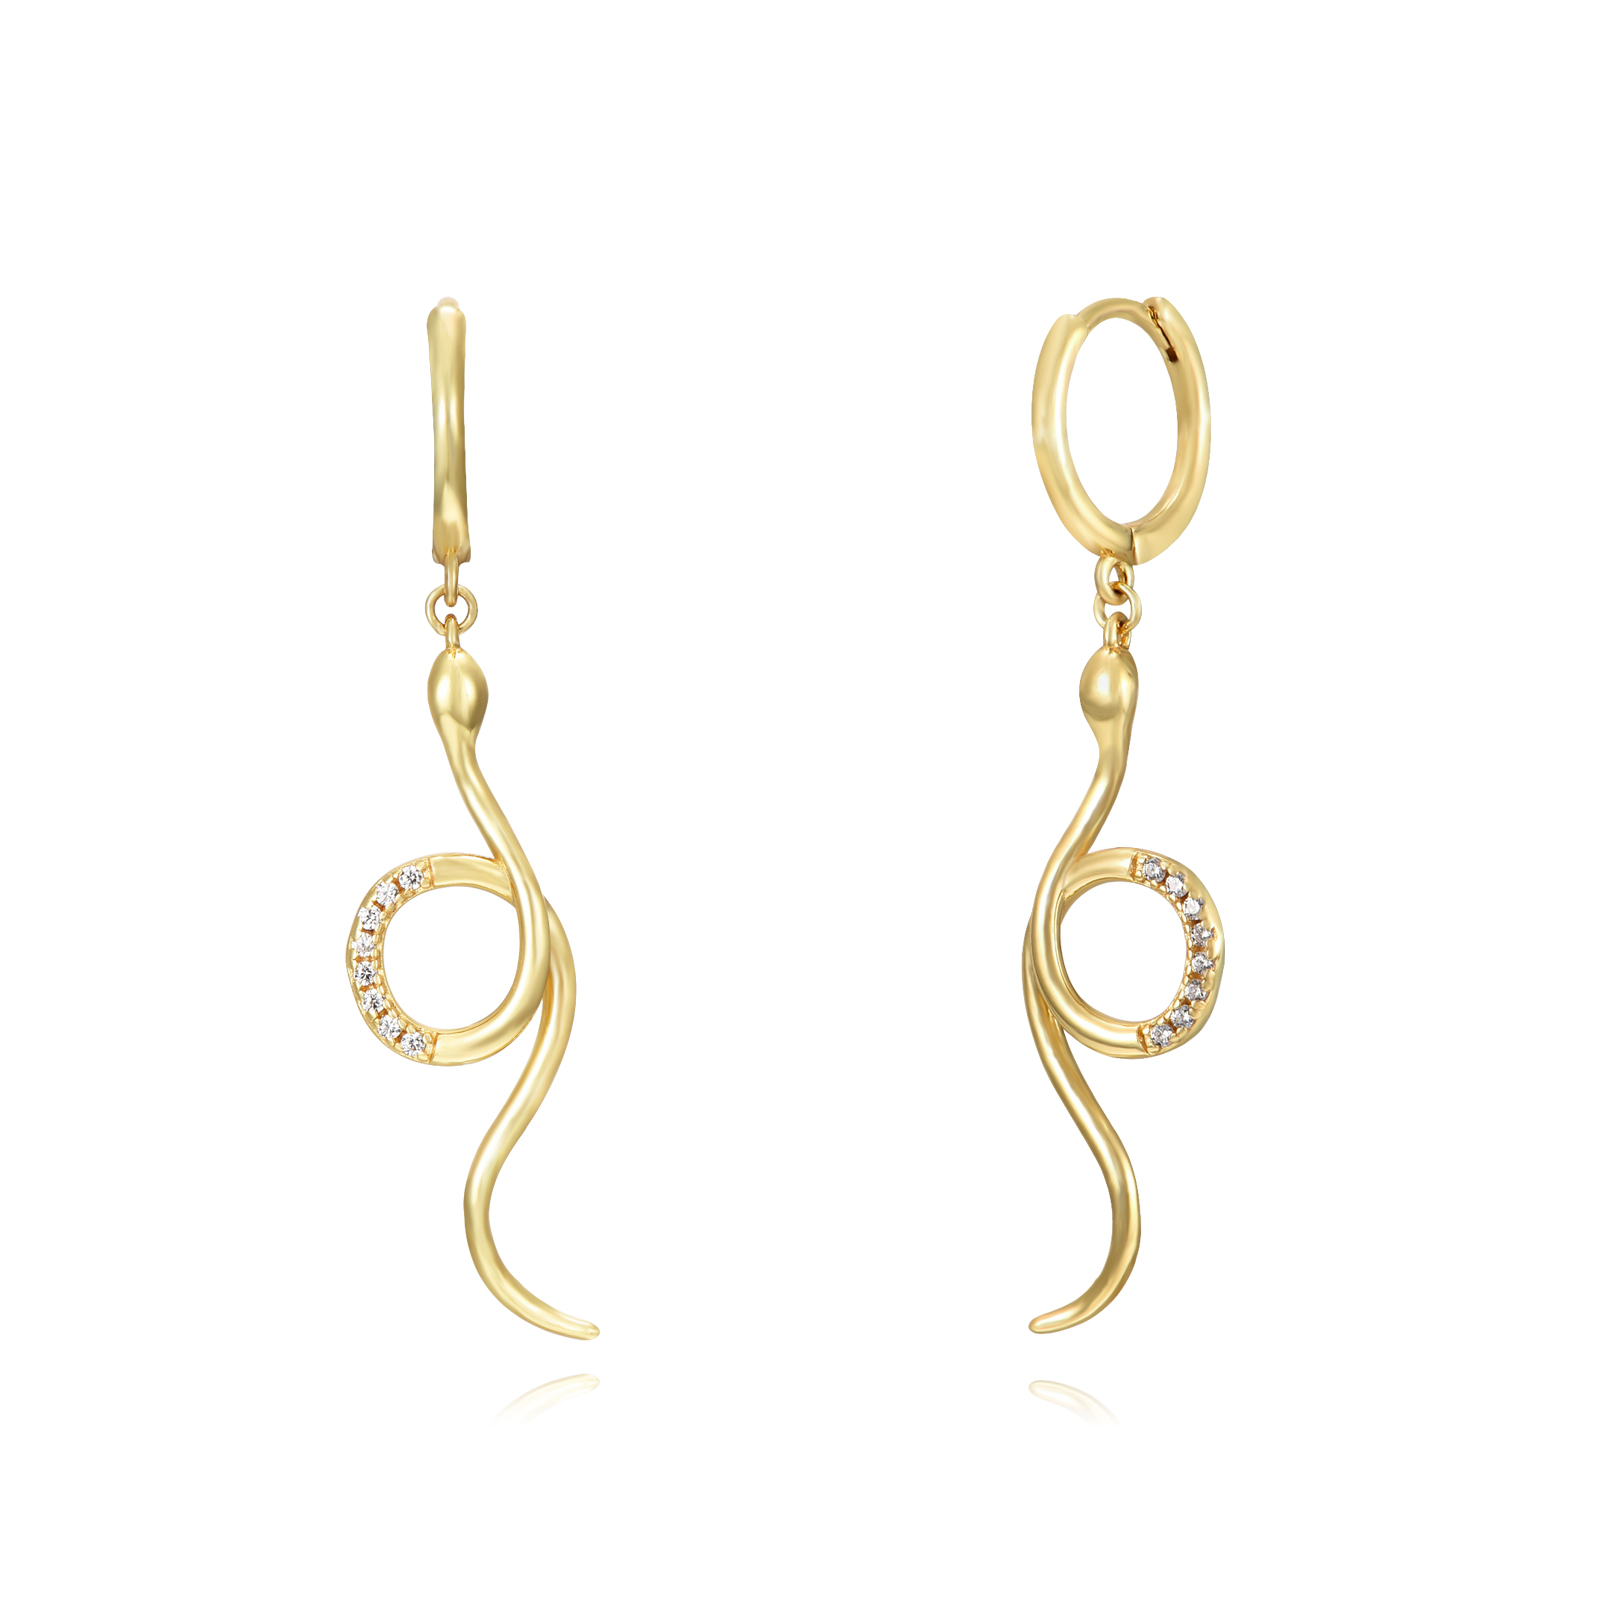 Silver Zircon Earrings Snake Hoop Earrings - Zirconia - 11 + 30 mm - Gold Plated and Rhodium Silver